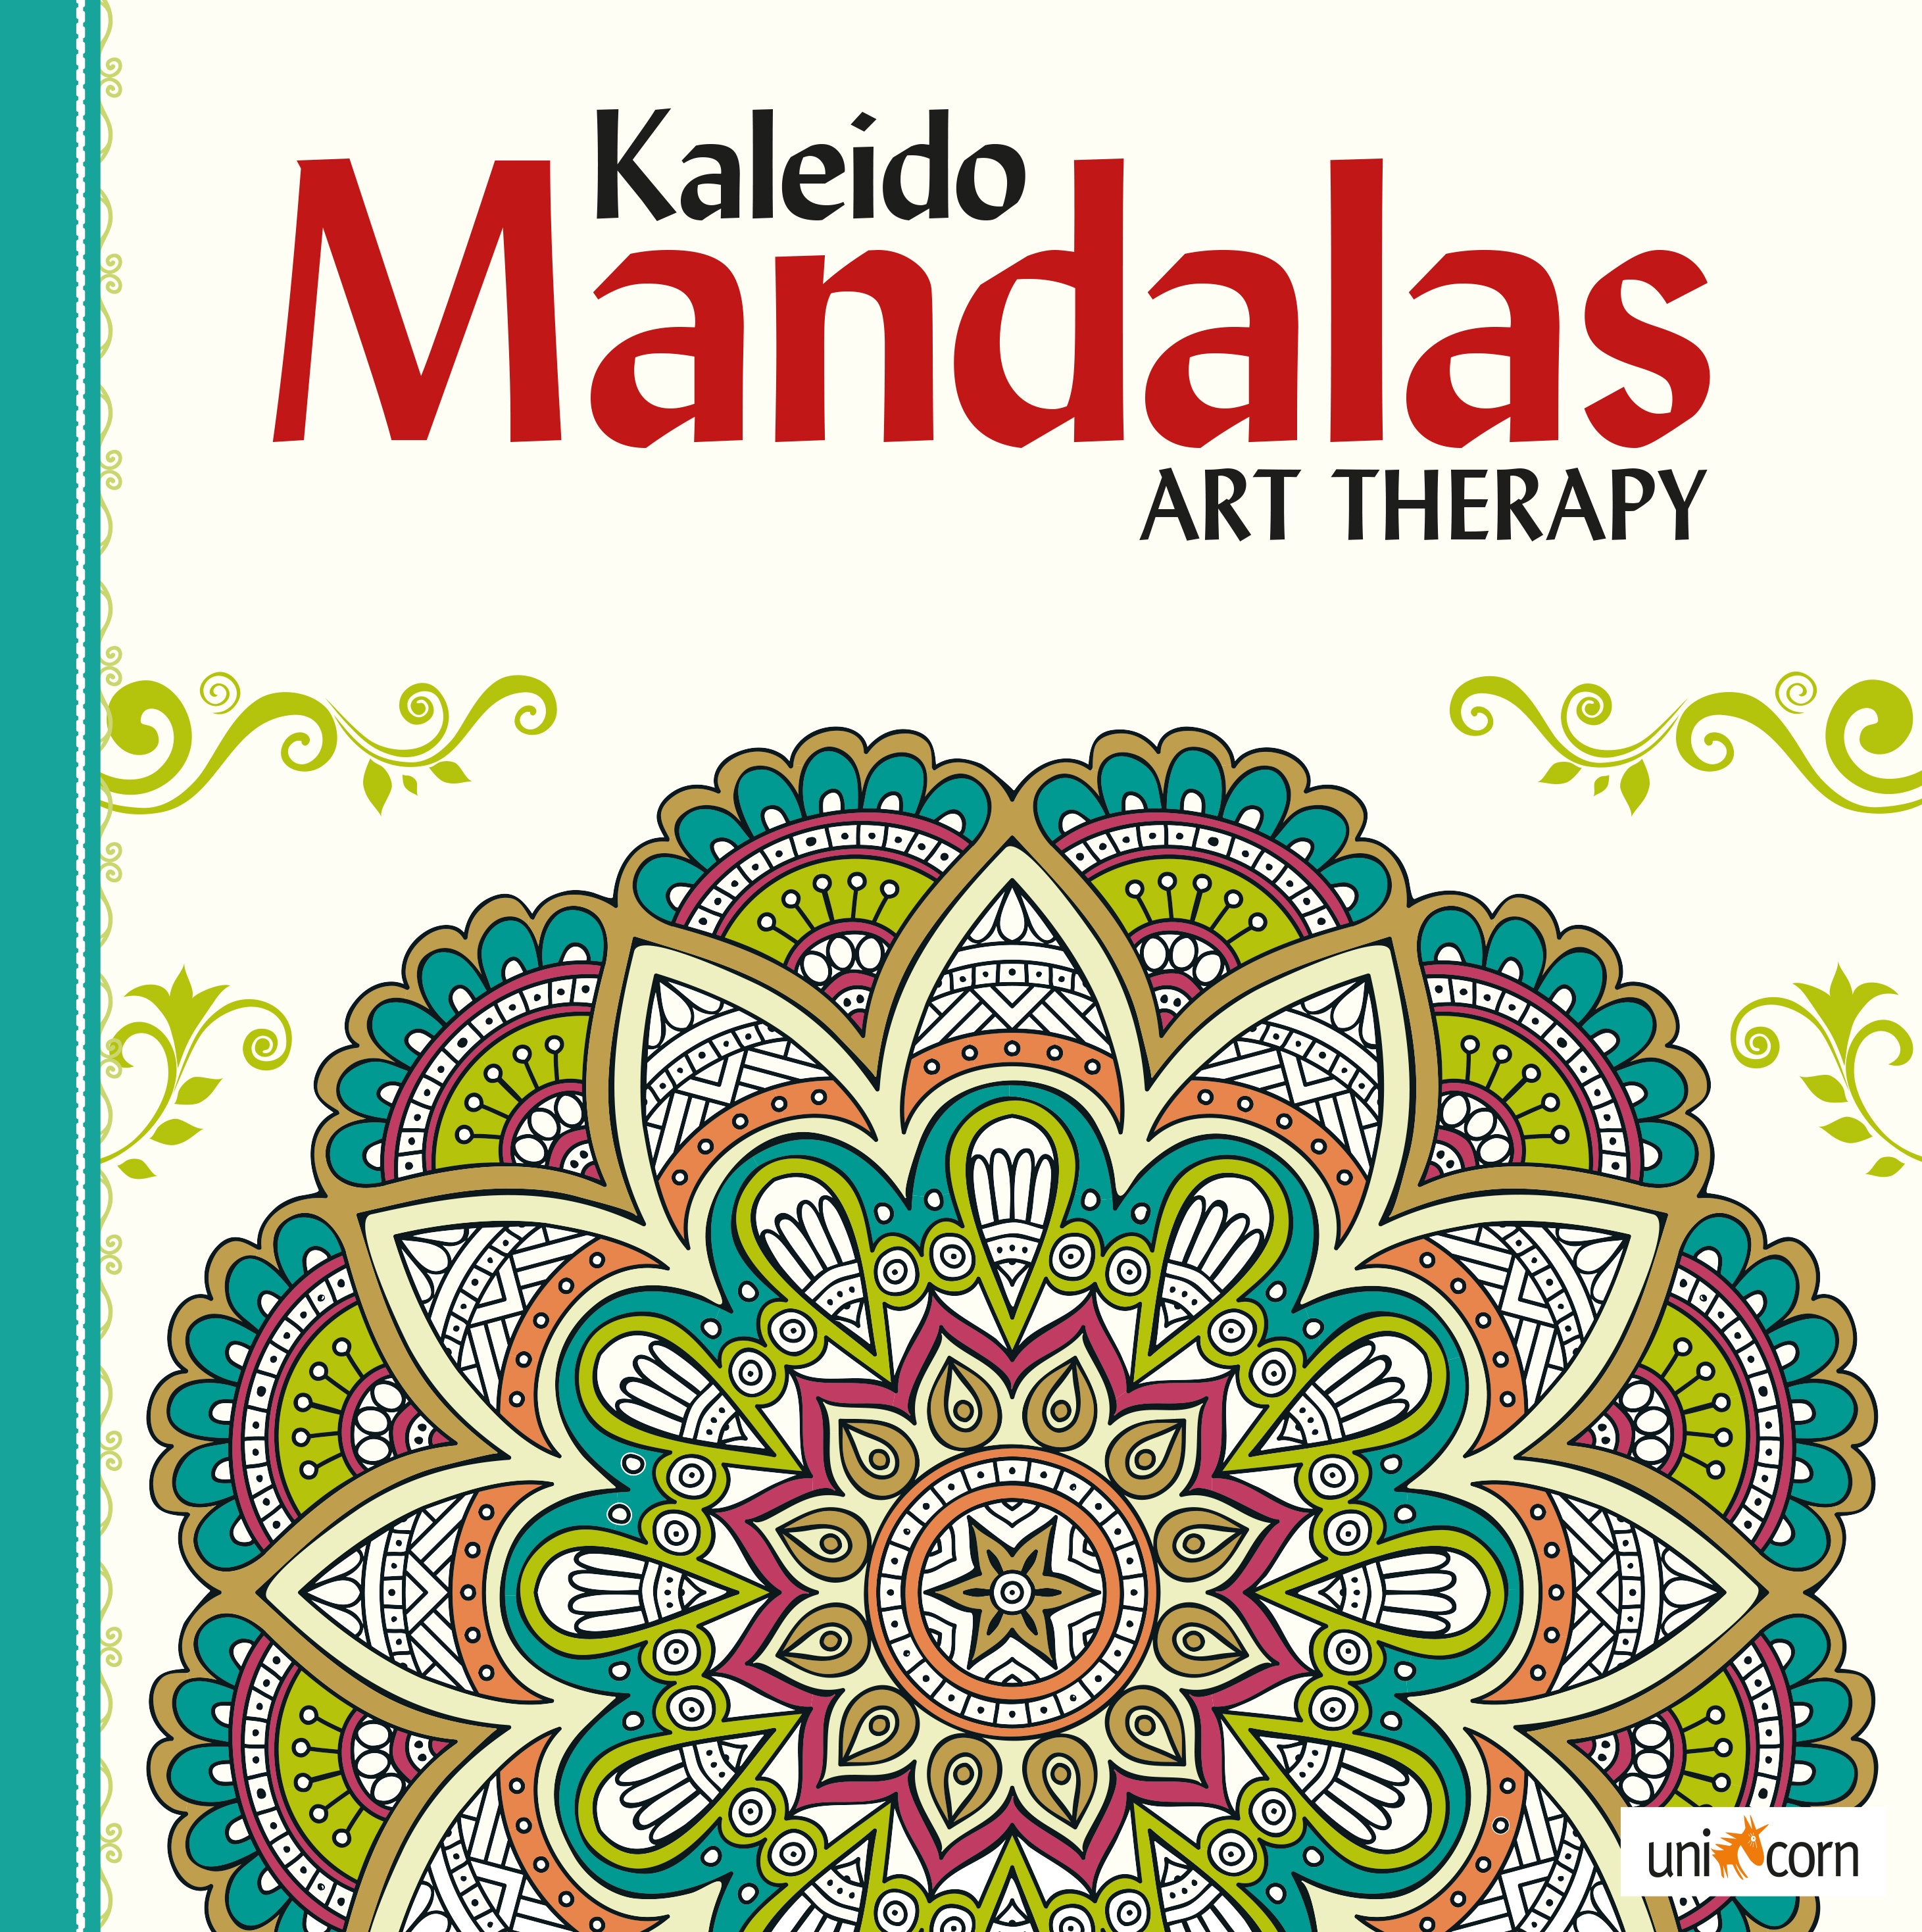 Faber-Castell Mandalas Malebog, Kaleido Art Therapy